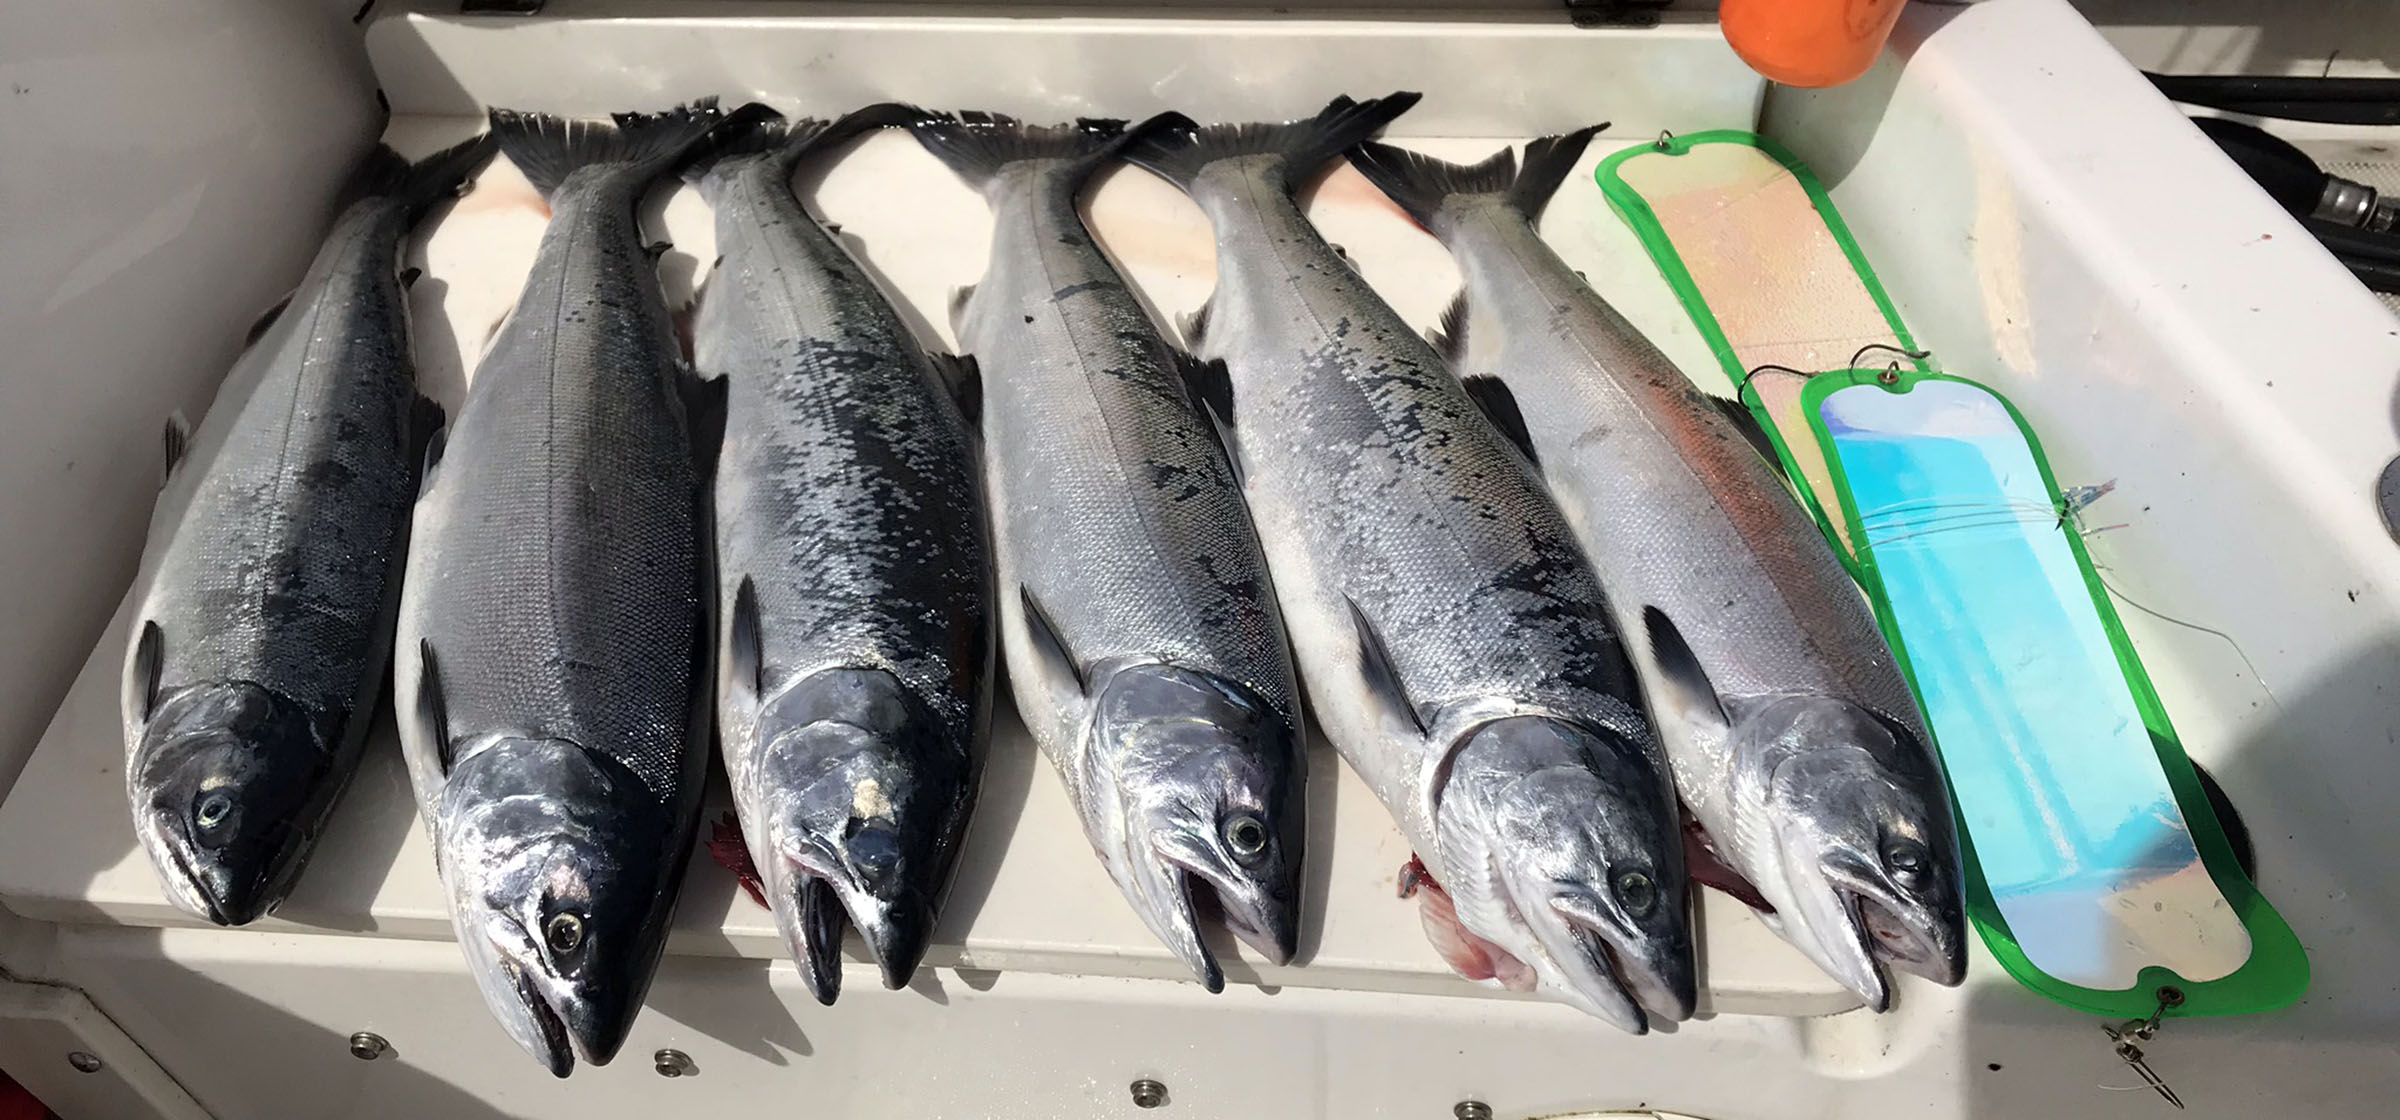 Puget Sound Marine Area 10 Salmon Fishing – June 19, 2020